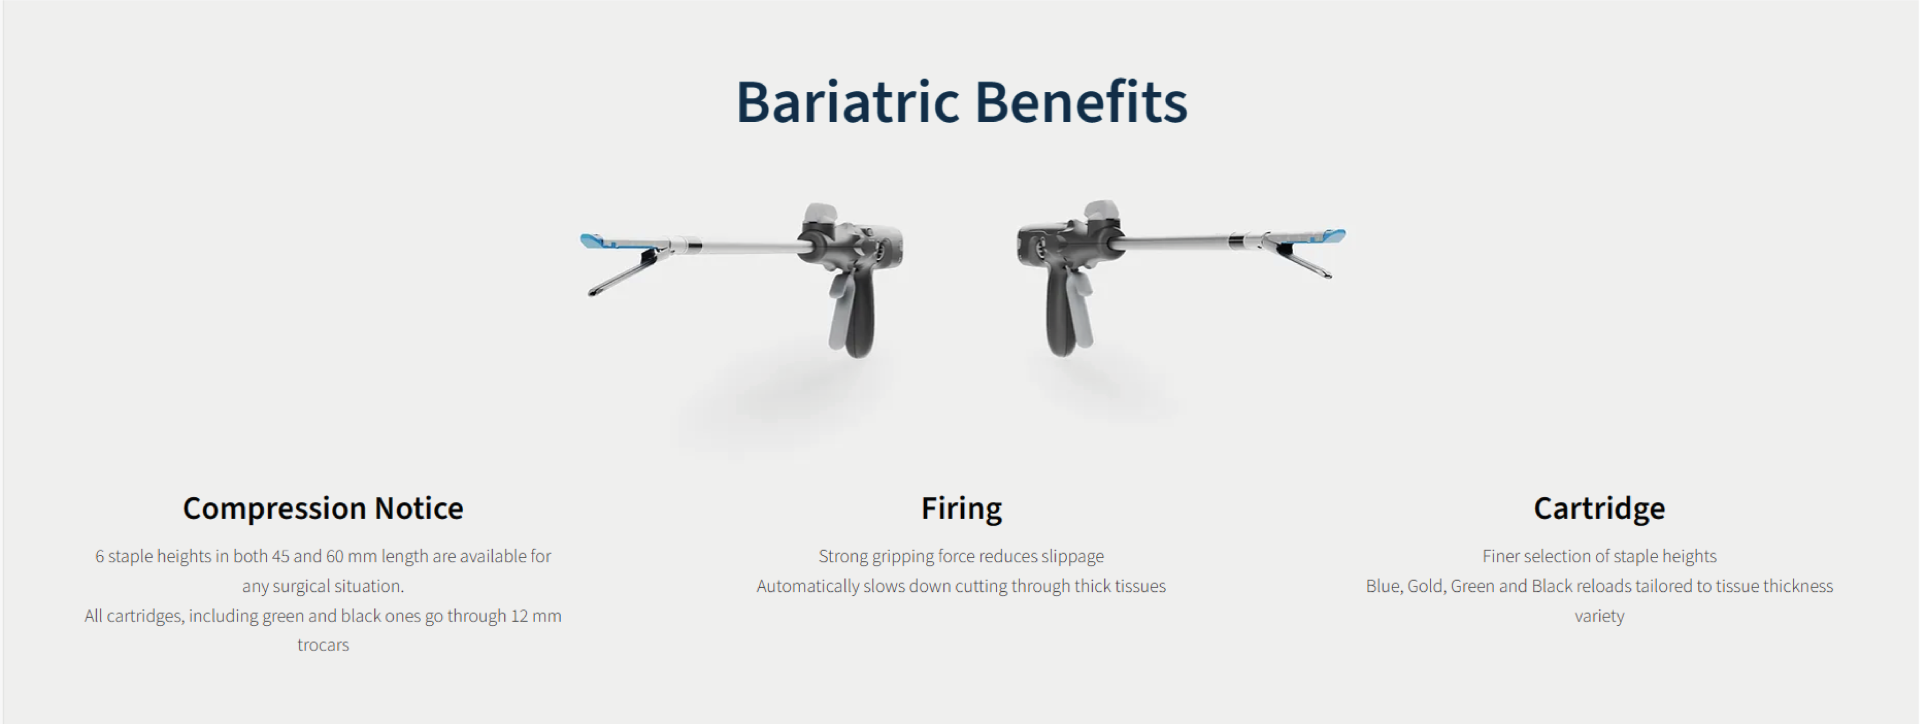 Bariatric Benefits-01